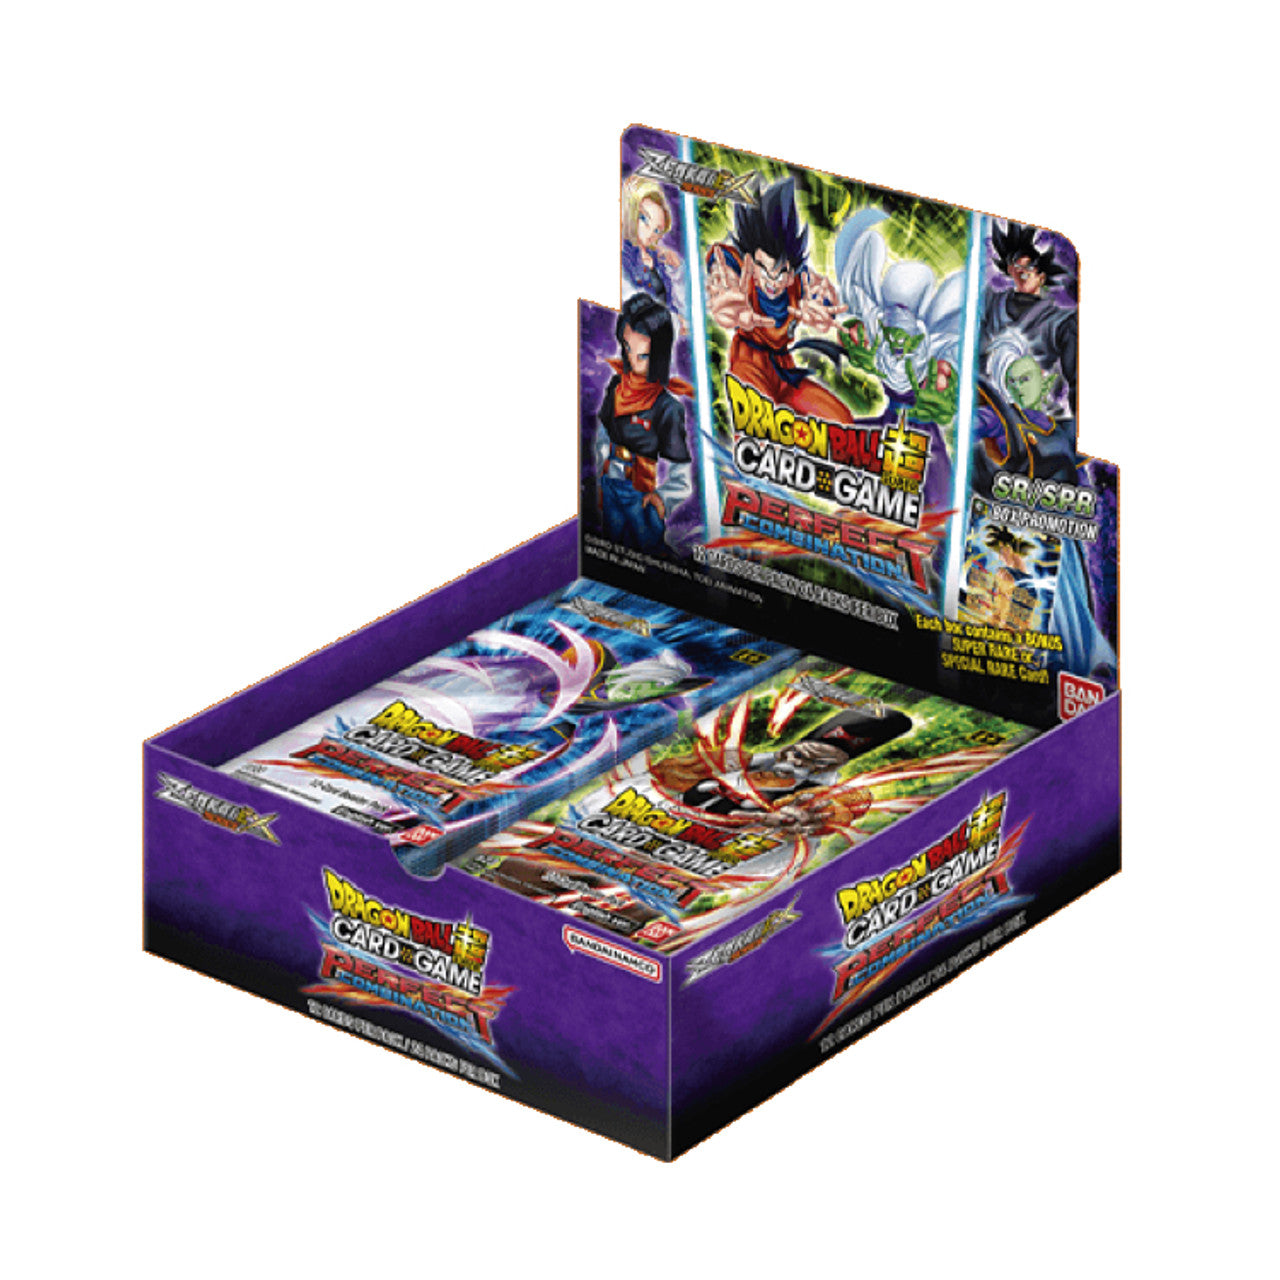 Dragon Ball Super TCG: Perfect Combination Booster Box